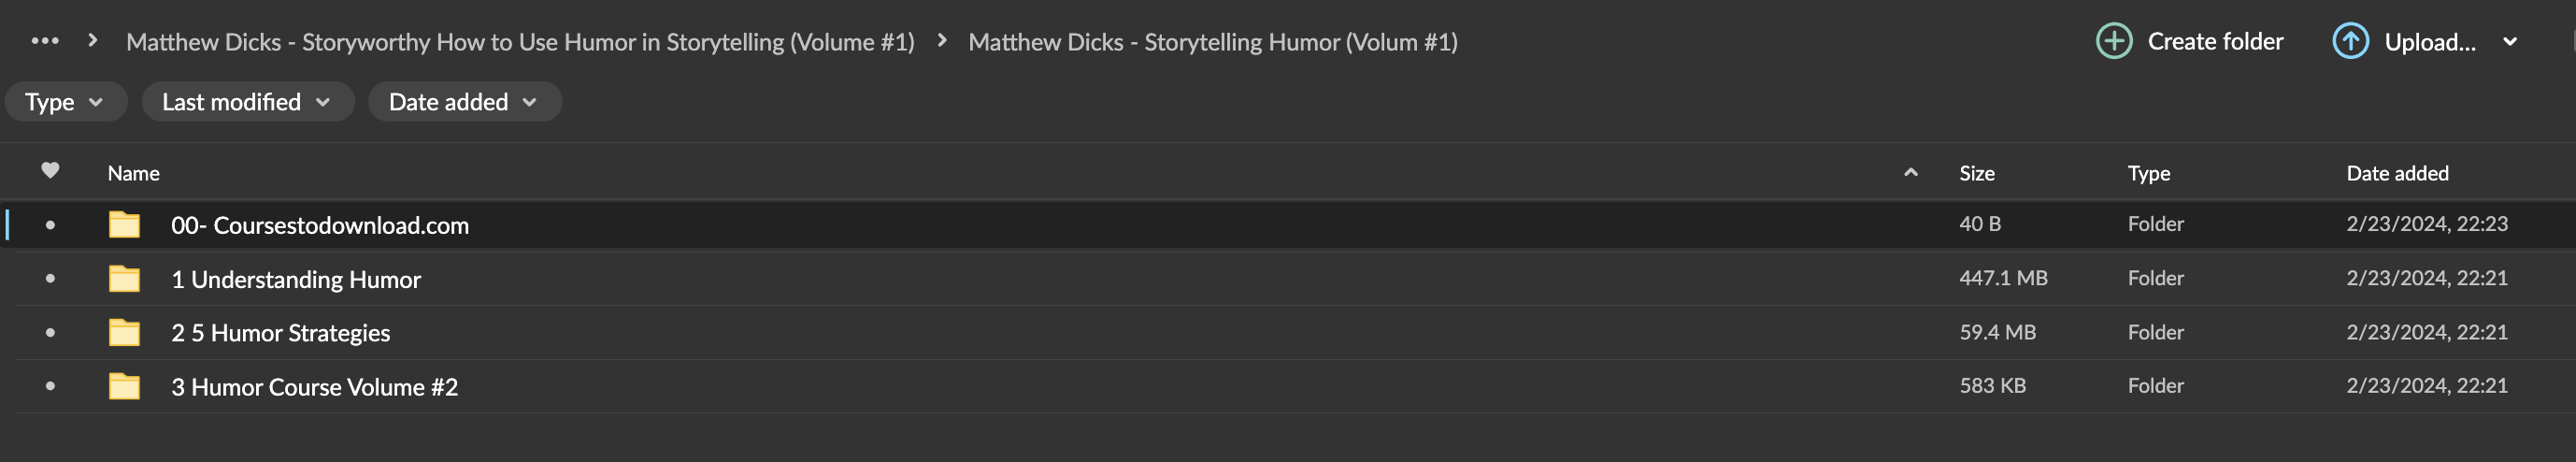 Matthew Dicks - Storyworthy: How to Use Humor in Storytelling (Volume #1) Download